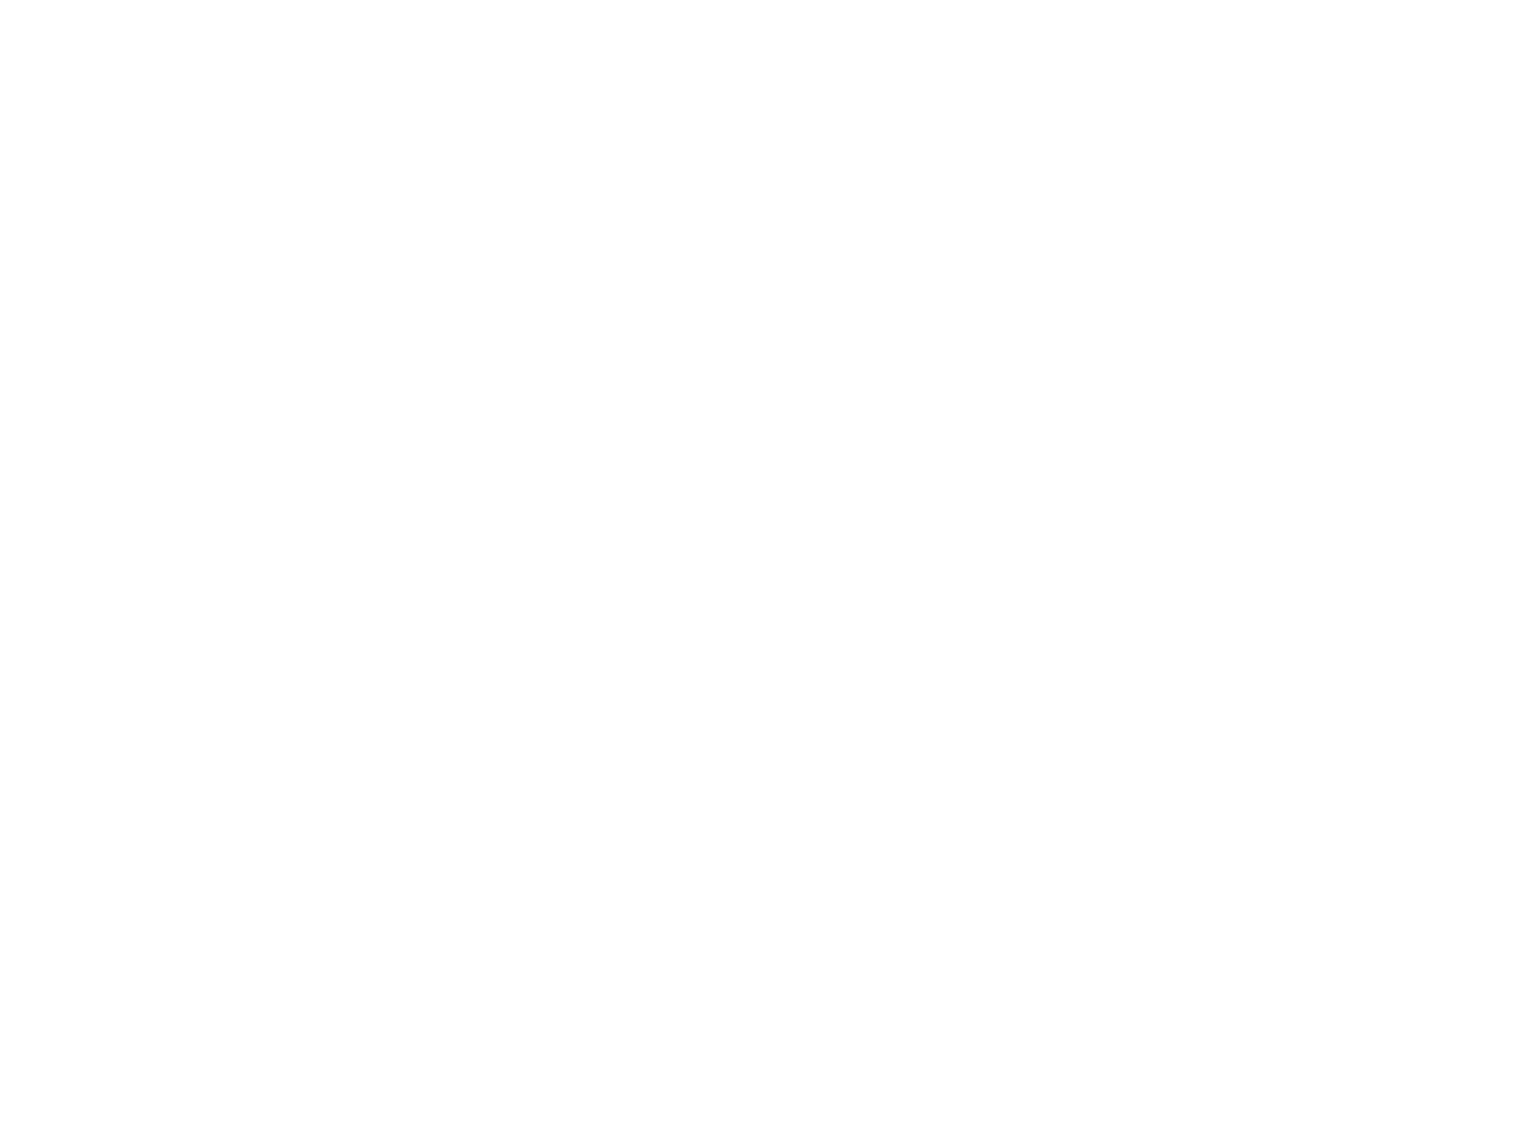 Carlos Catana